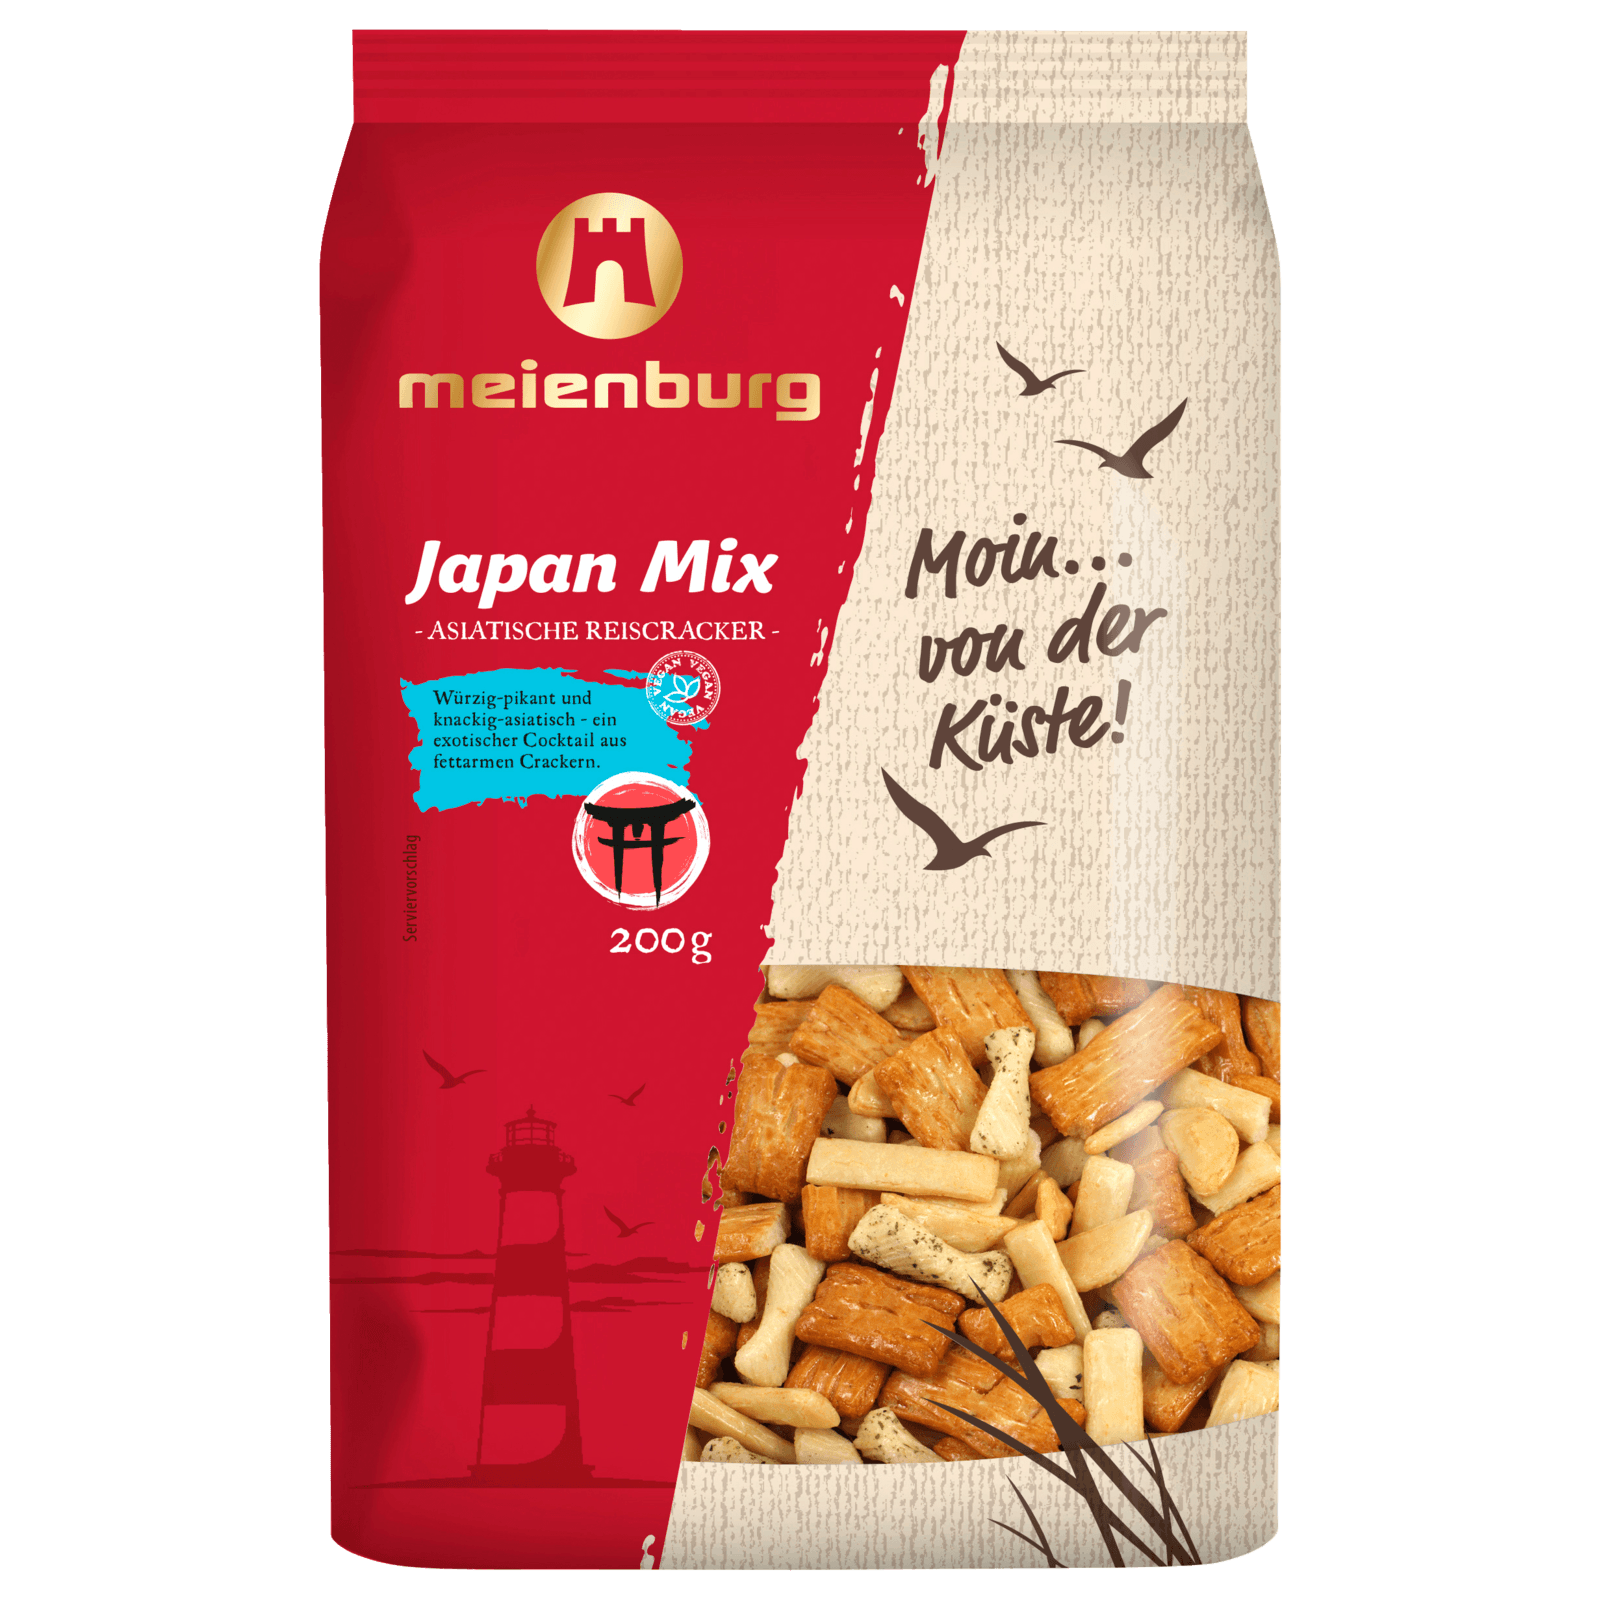 Meienburg Japan Asiatische Reiscracker 200g bei REWE online